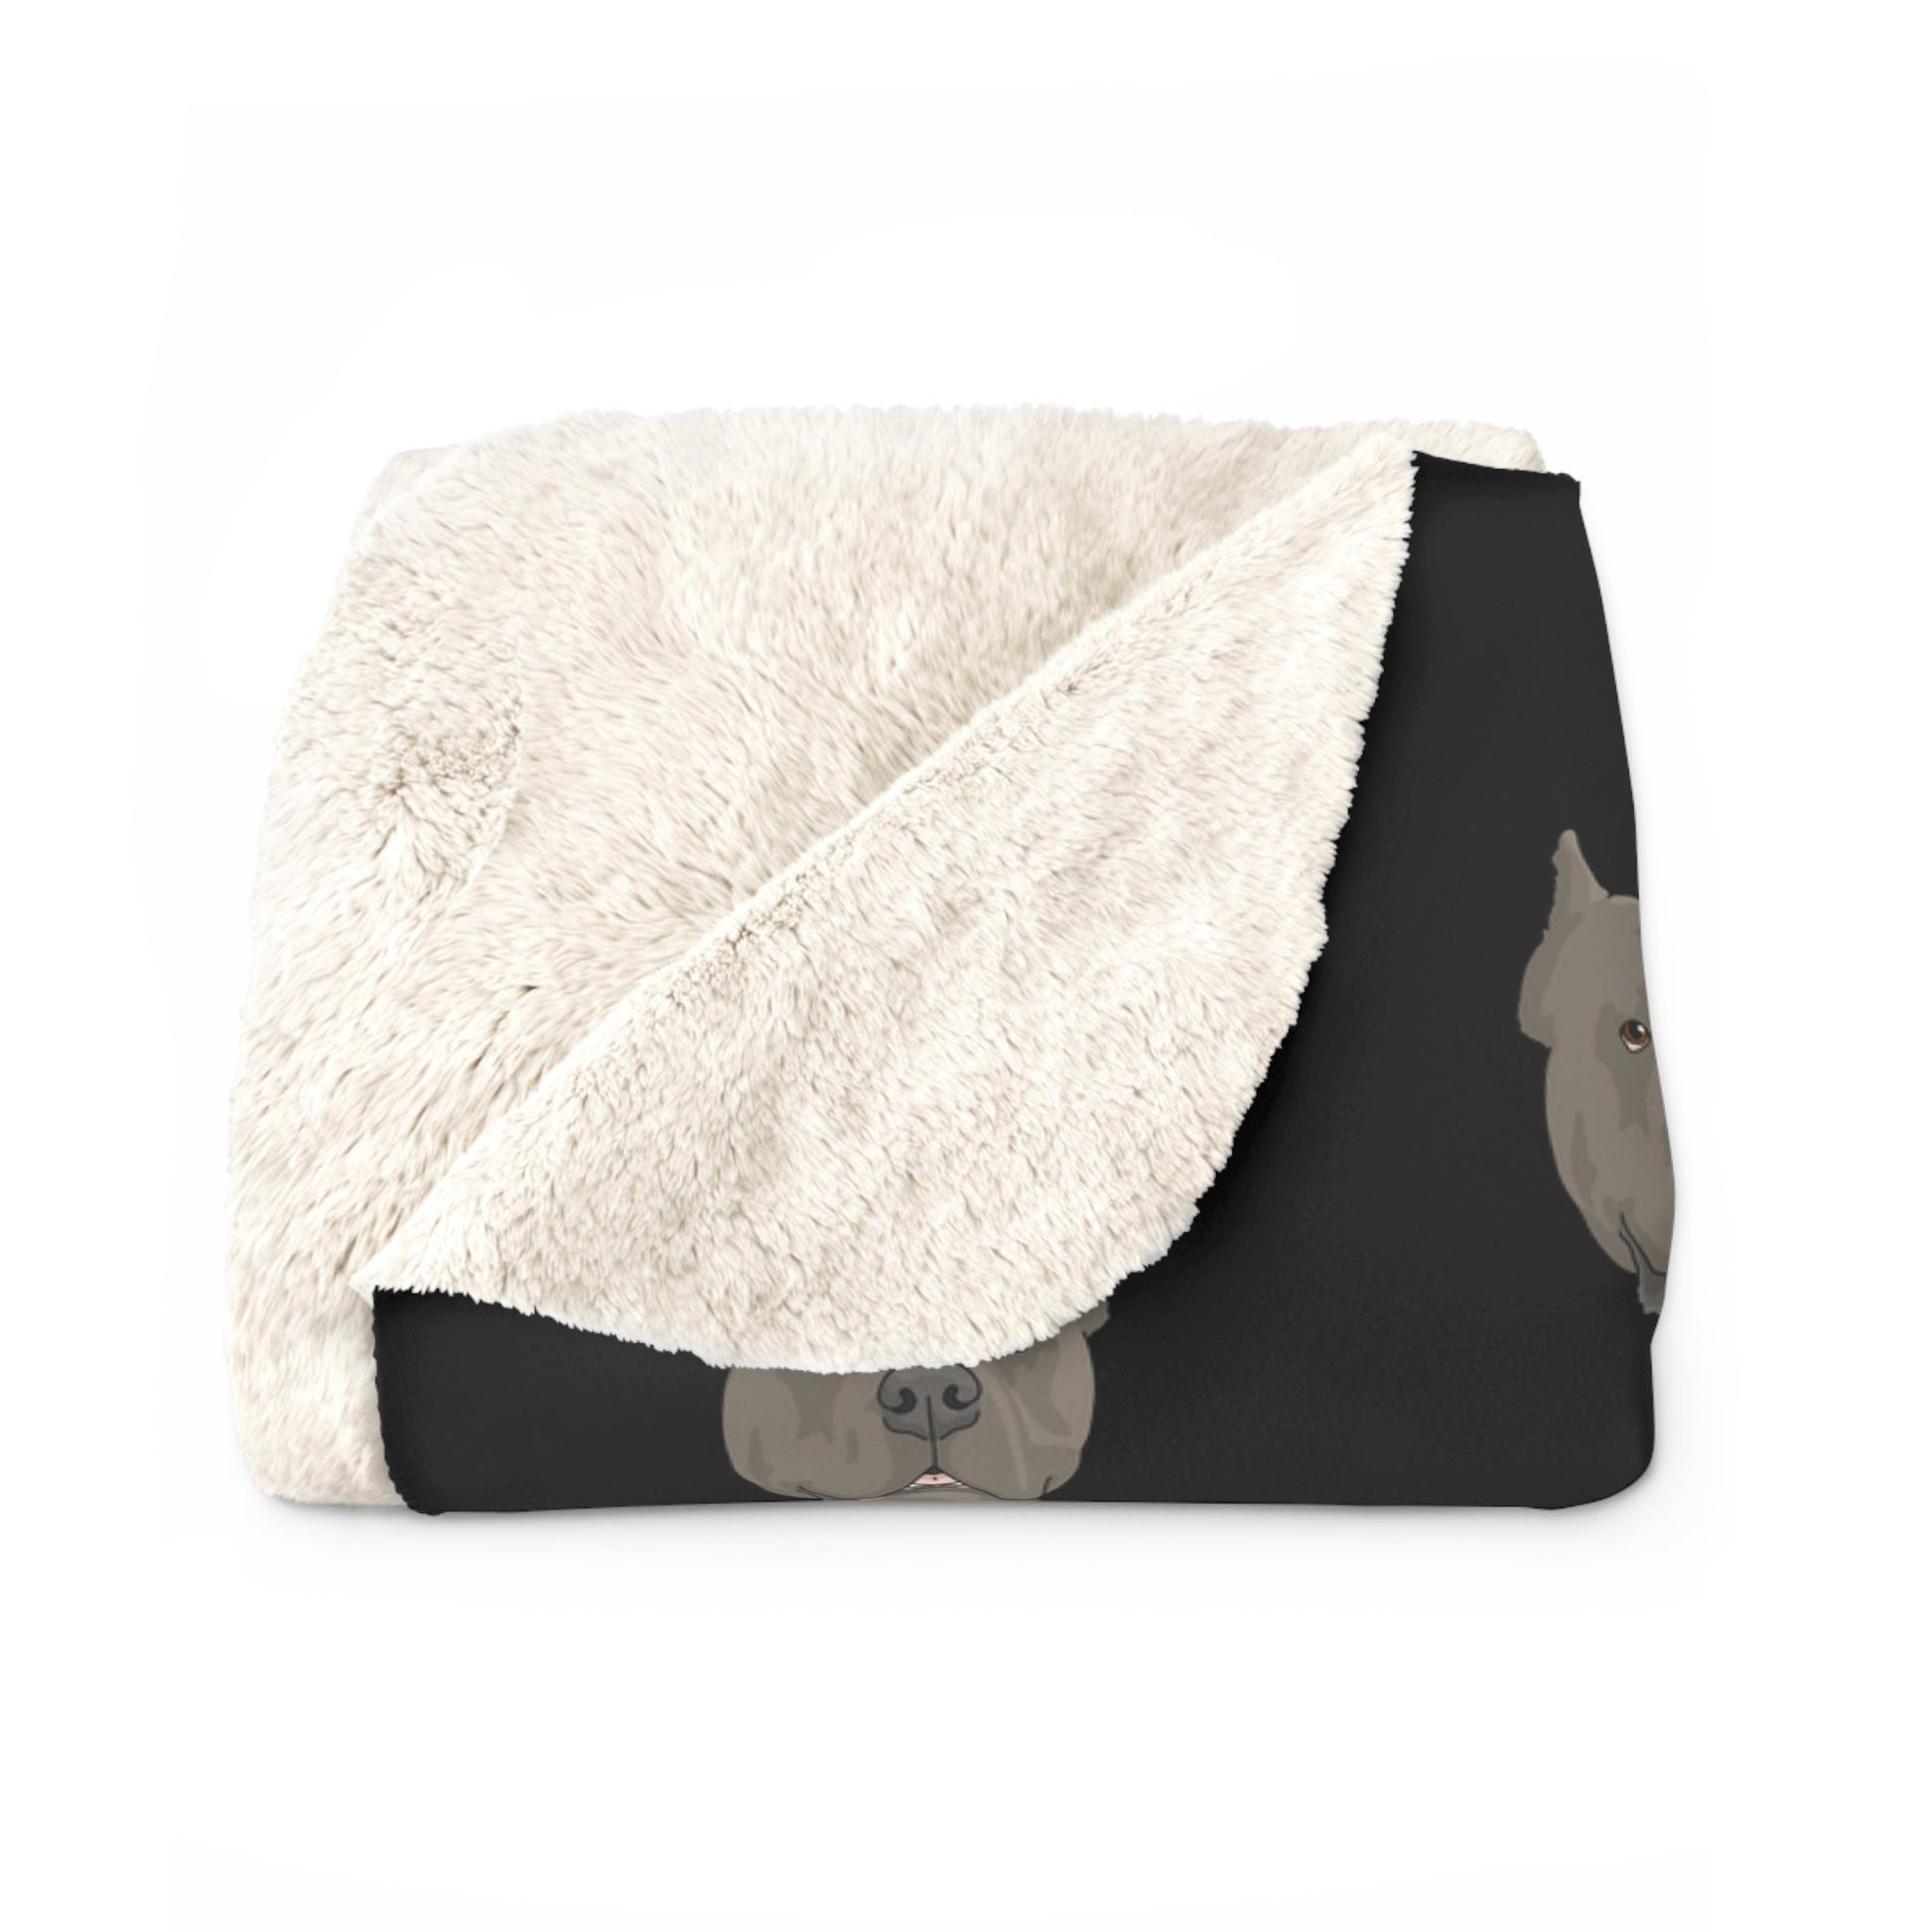 Cane Corso | Sherpa Fleece Blanket - Detezi Designs-55691340971883685908